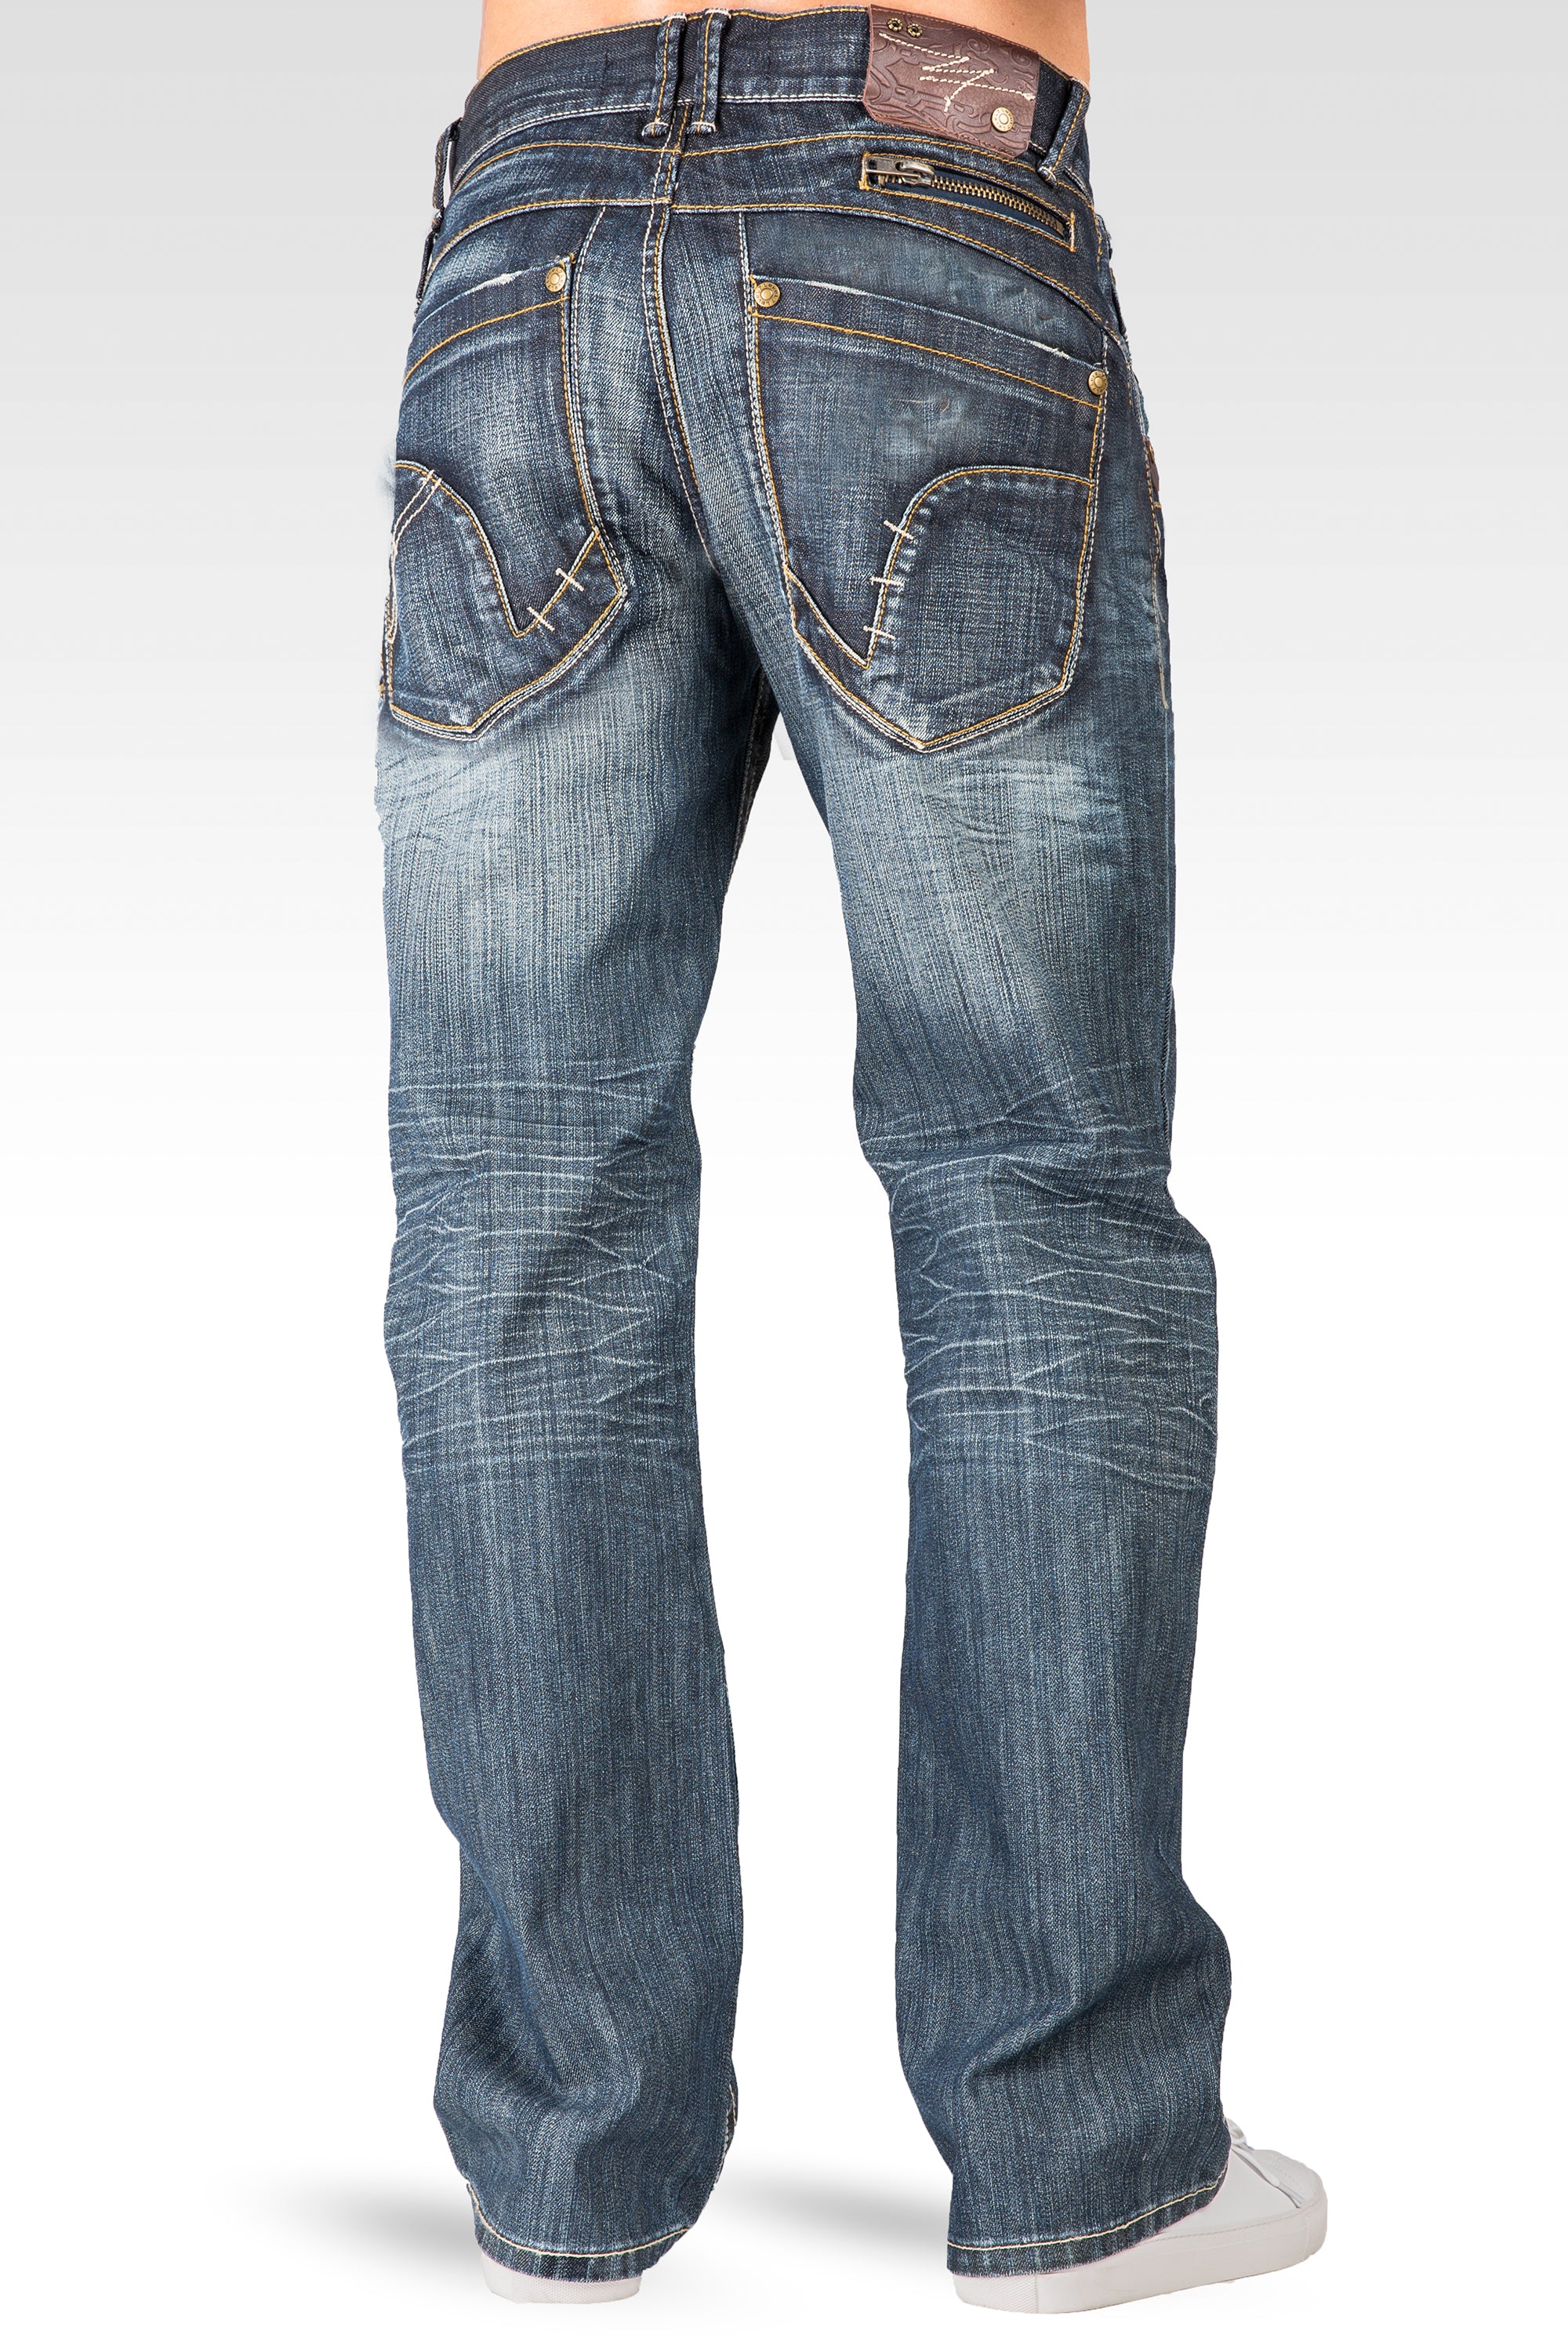 dwaas Bepalen erts Level 7 Men's Zipper Utility Pocket Relaxed Bootcut Distressed Jean Premium  Denim – Level 7 Jeans